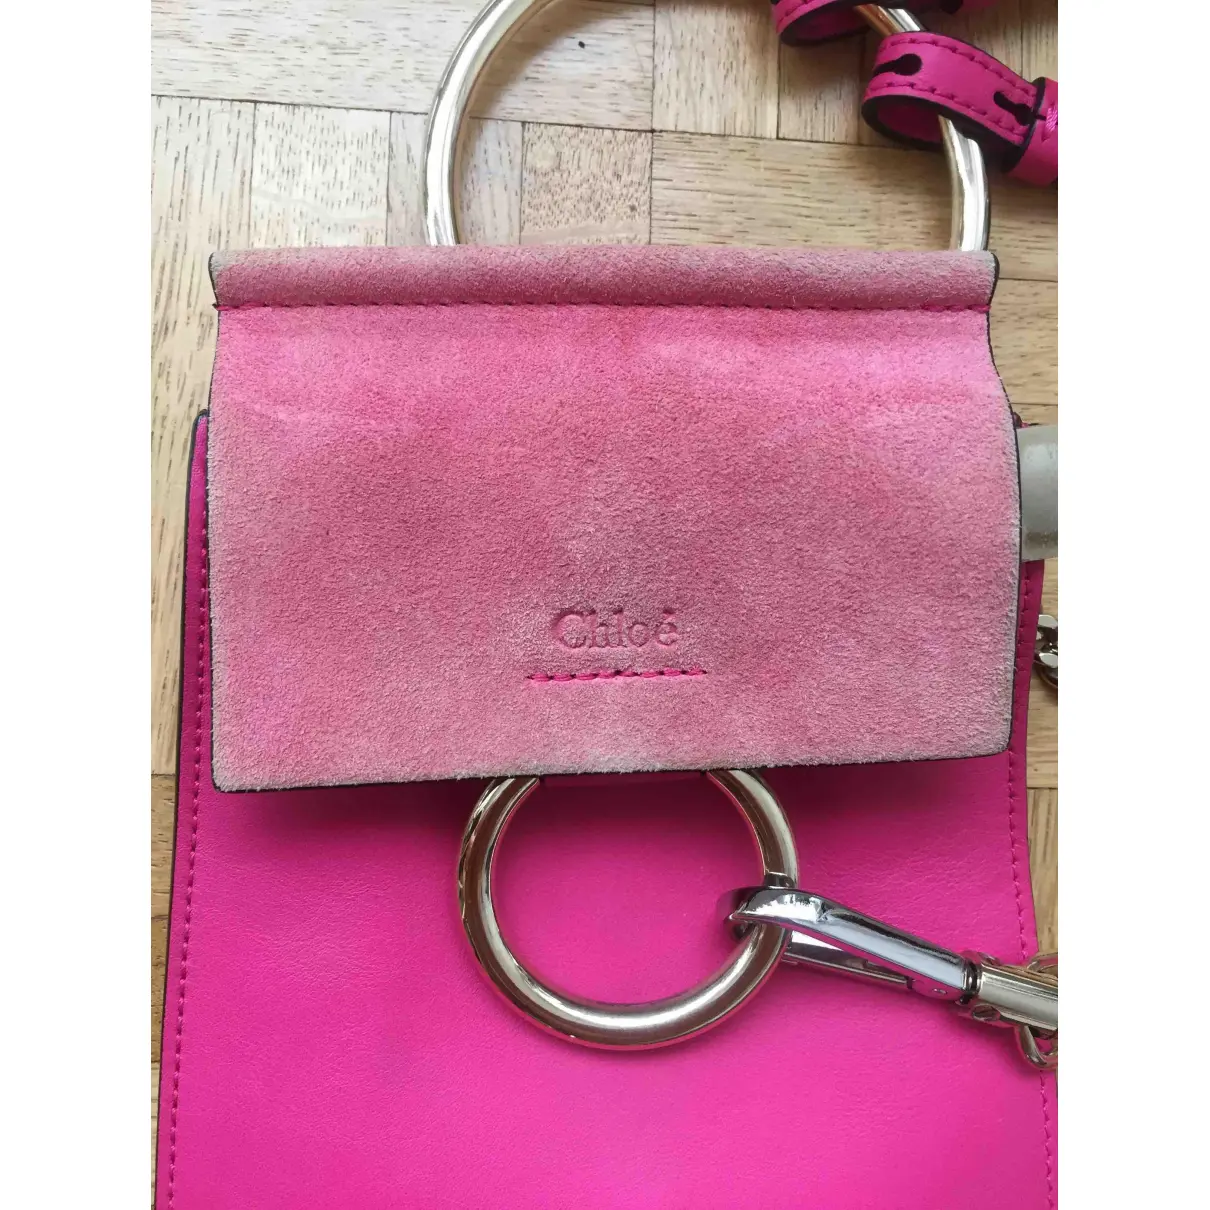 Buy Chloé Faye leather crossbody bag online